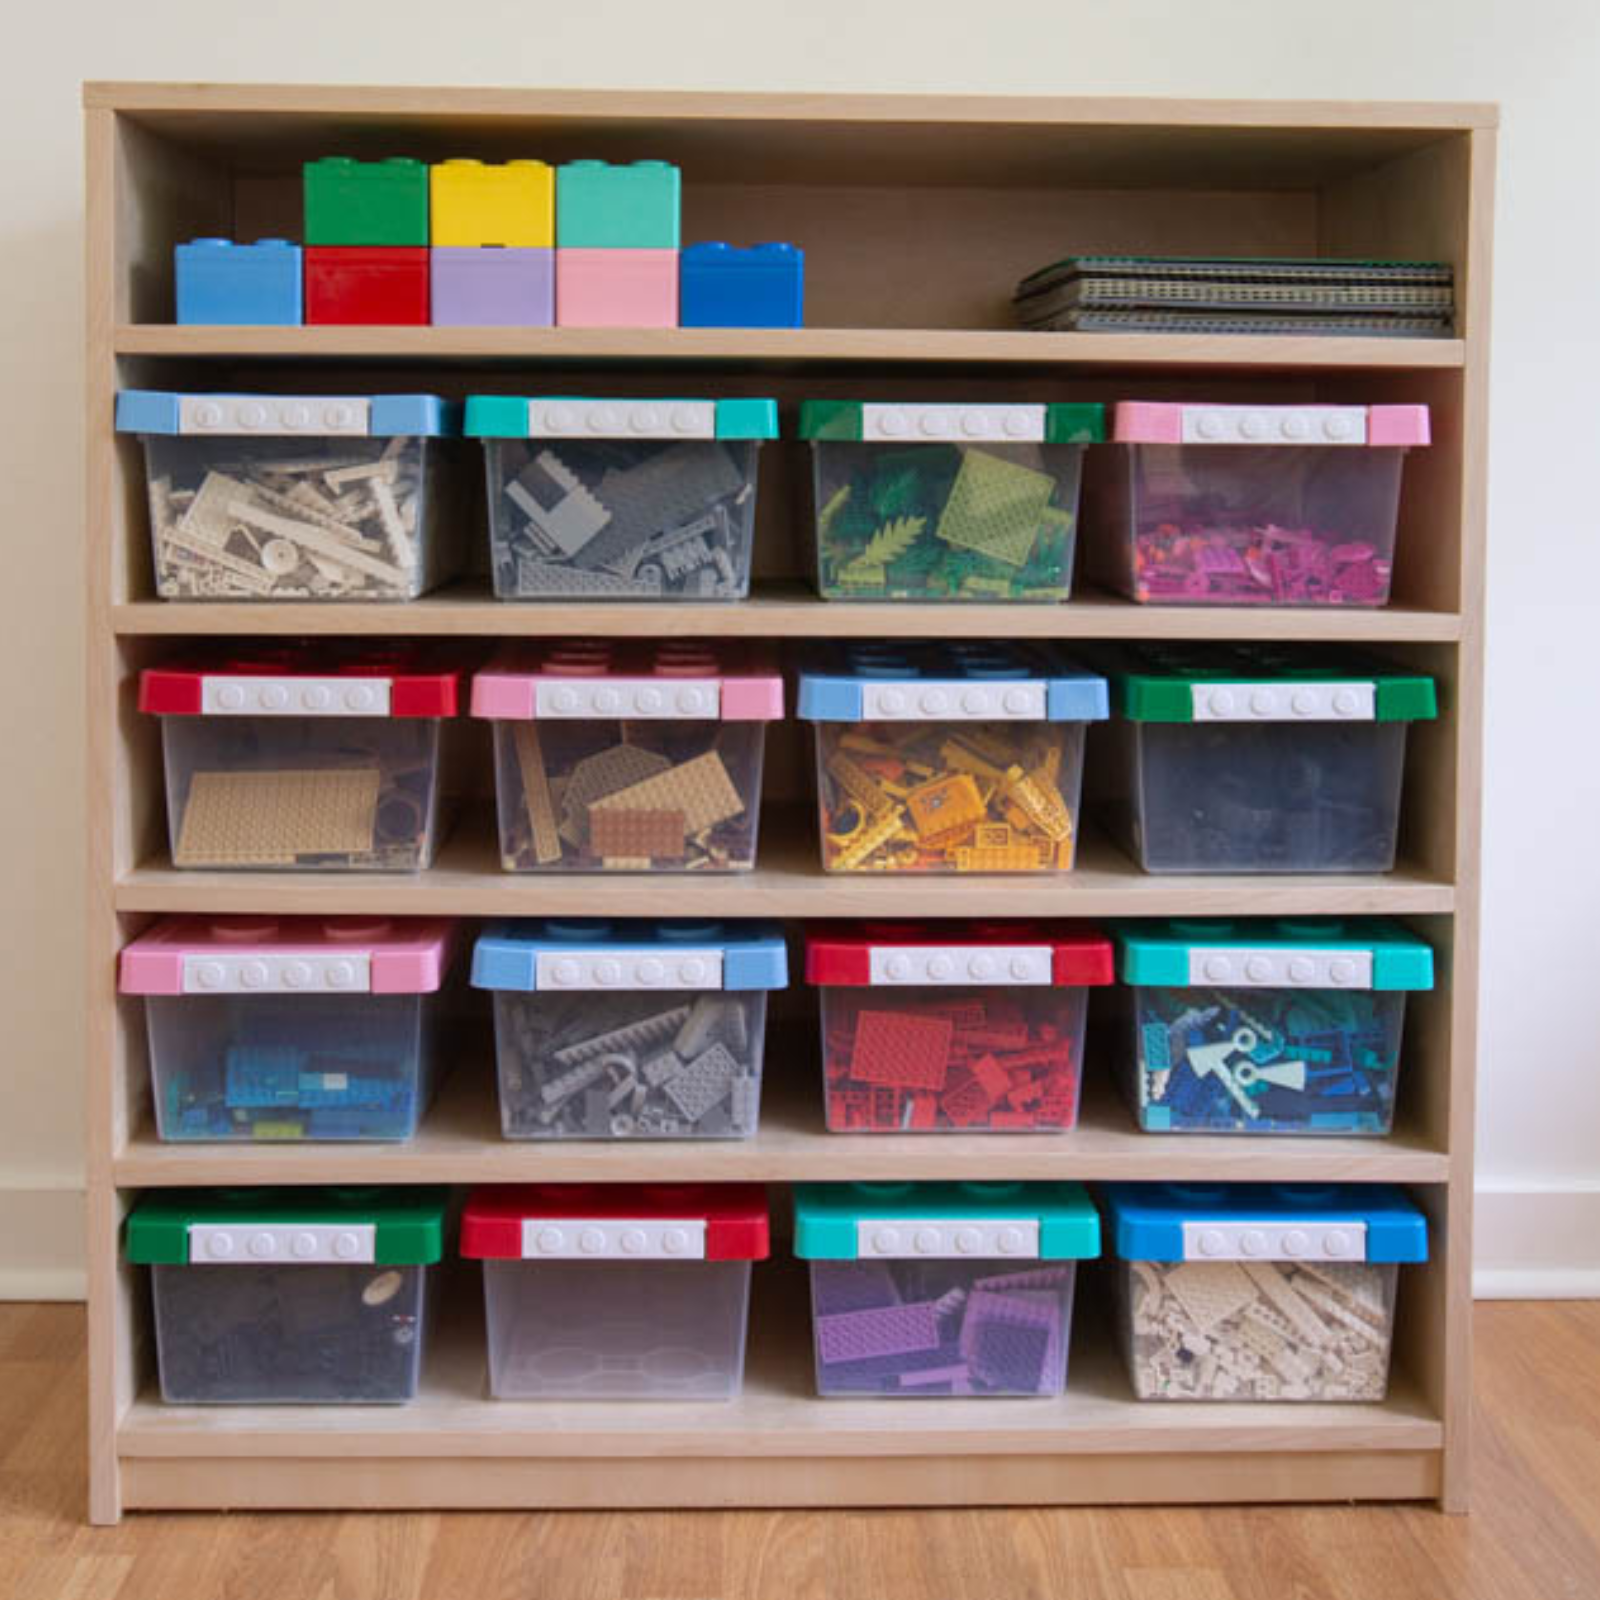 Feature for Lego Shelf